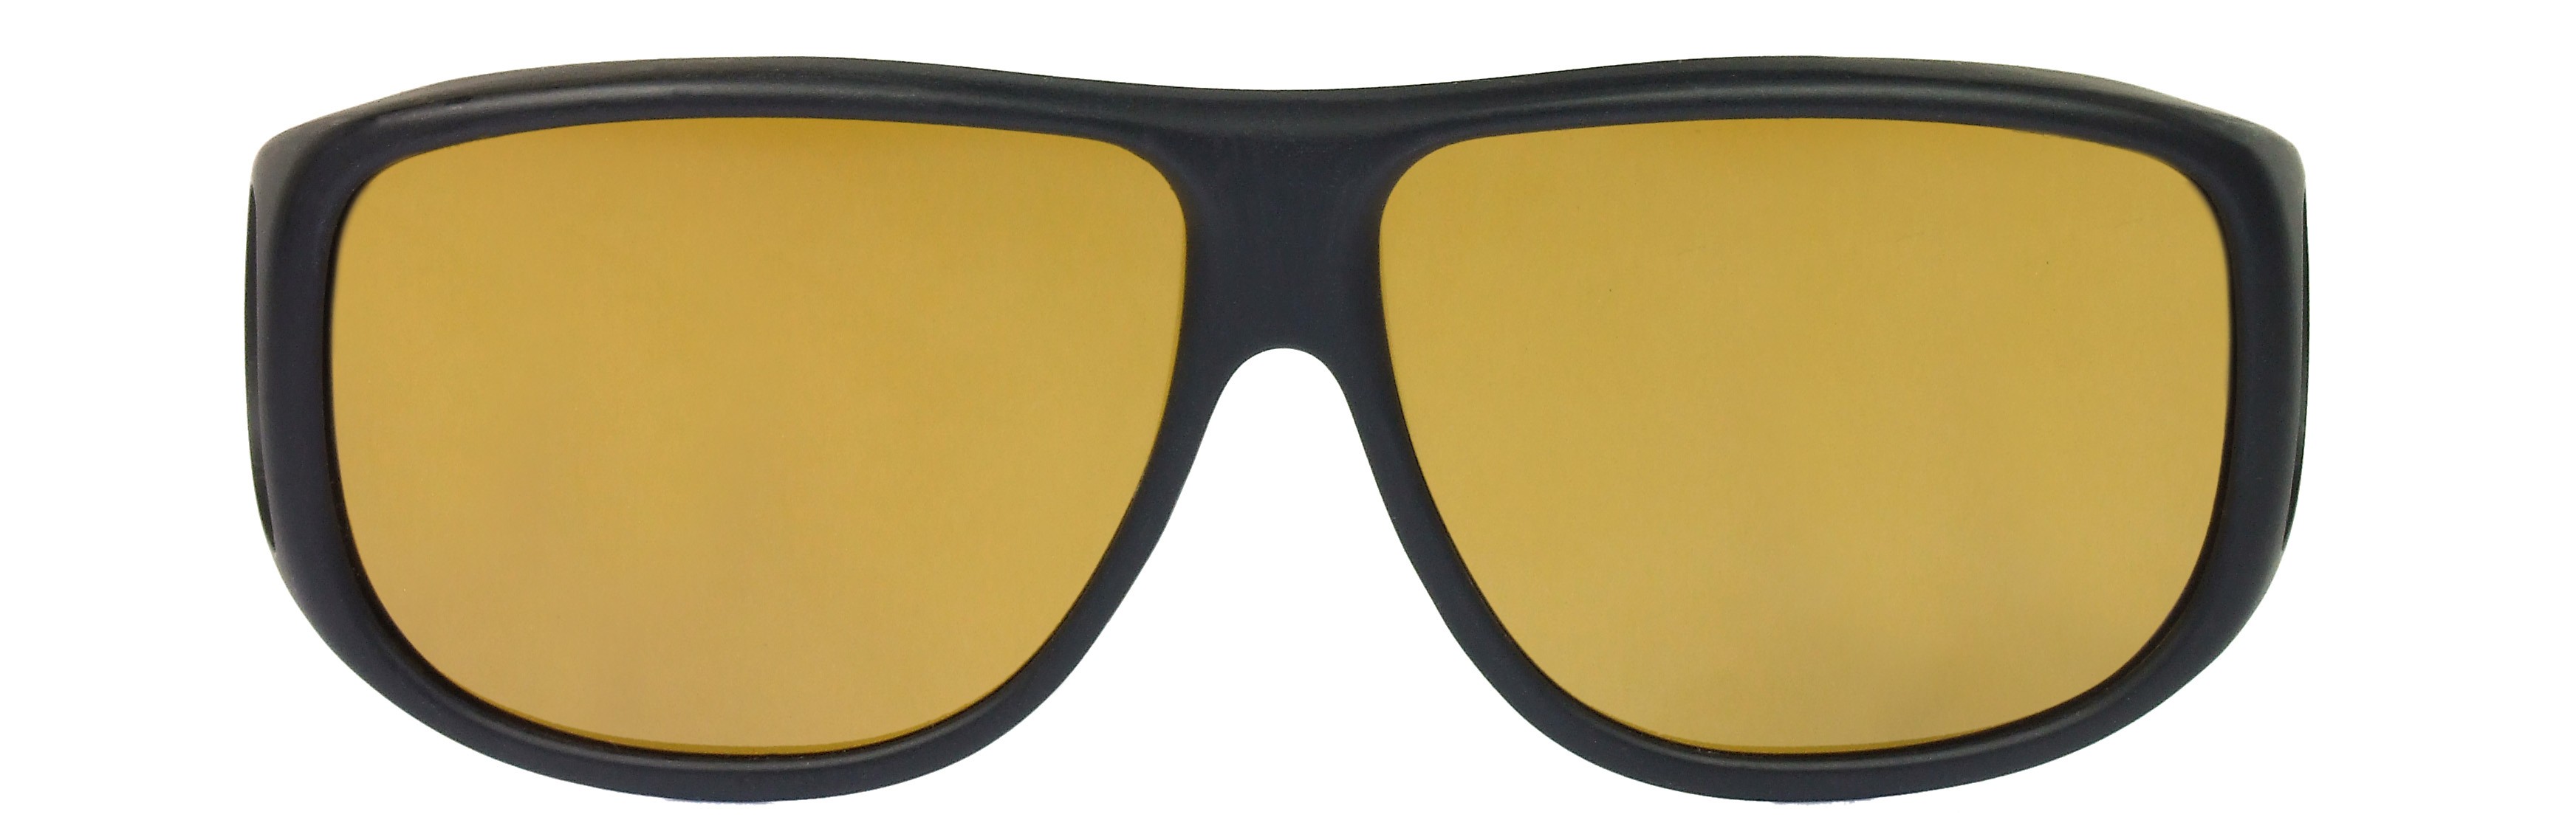 Fitovers Eyewear - Aviator Collection - Black/polarized Yellow - image 2 of 4